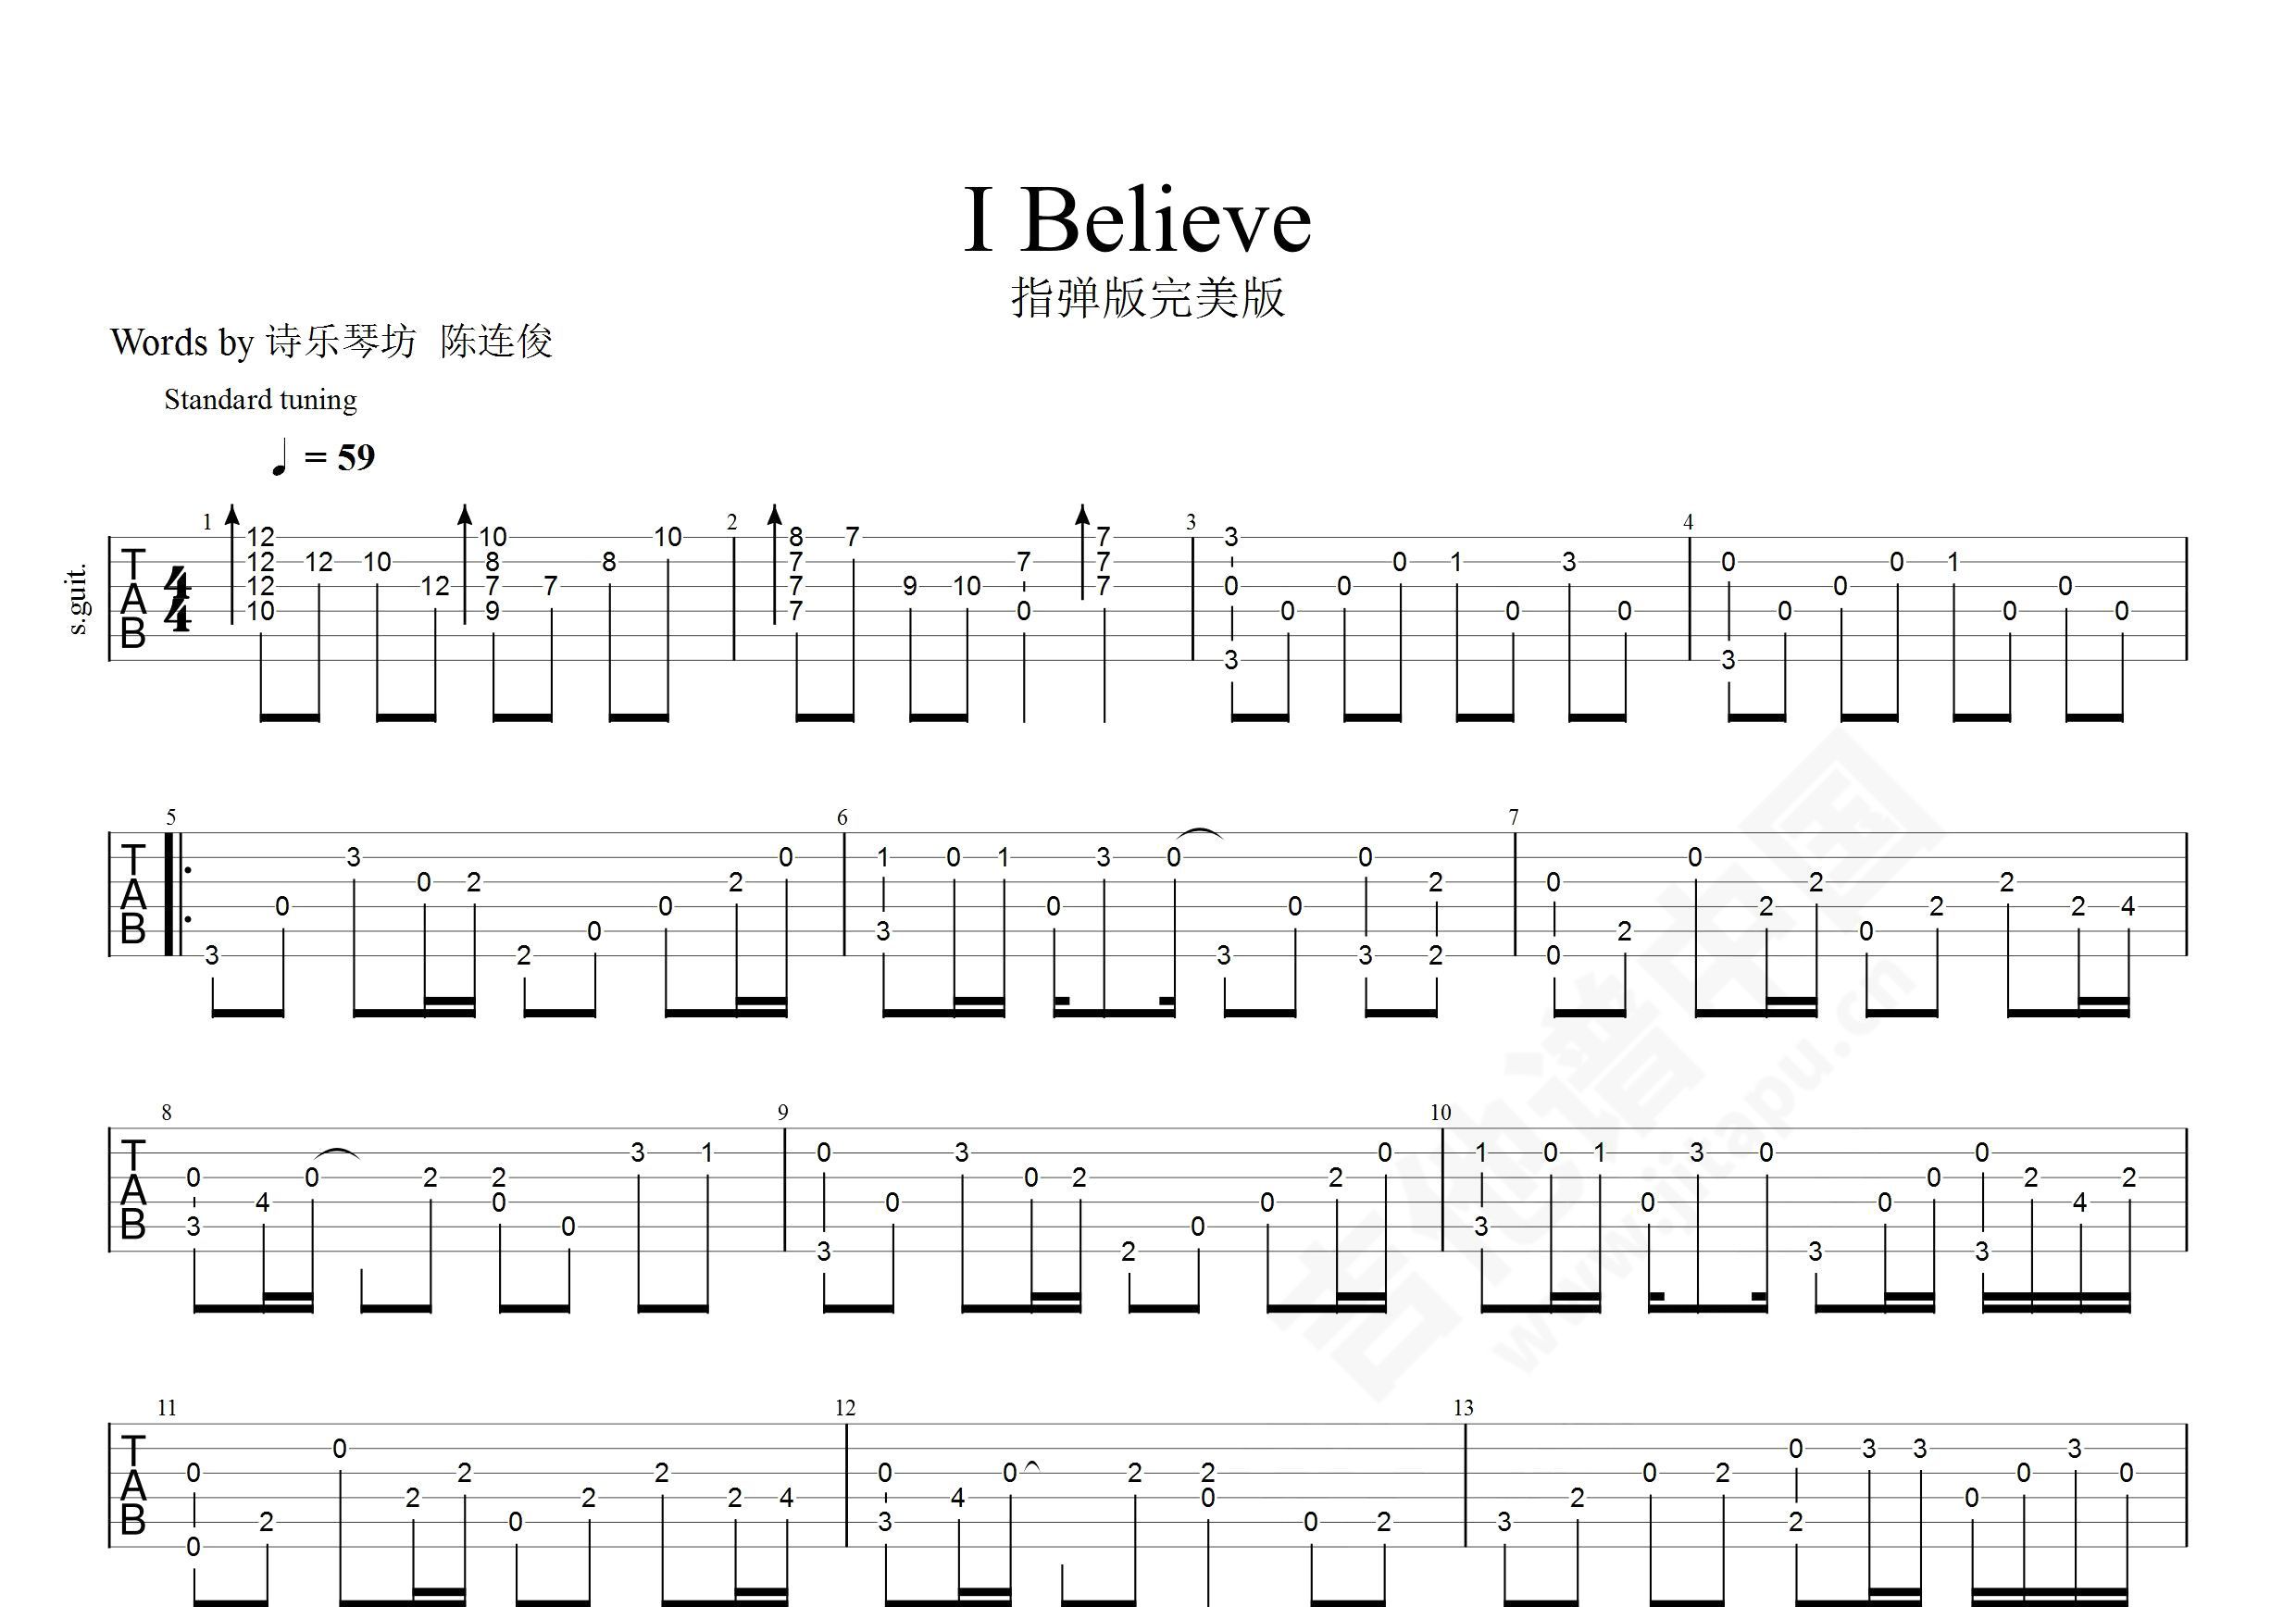 I Believe吉他谱 - 范逸臣 - G调吉他弹唱谱 - 完整编配版 - 琴谱网